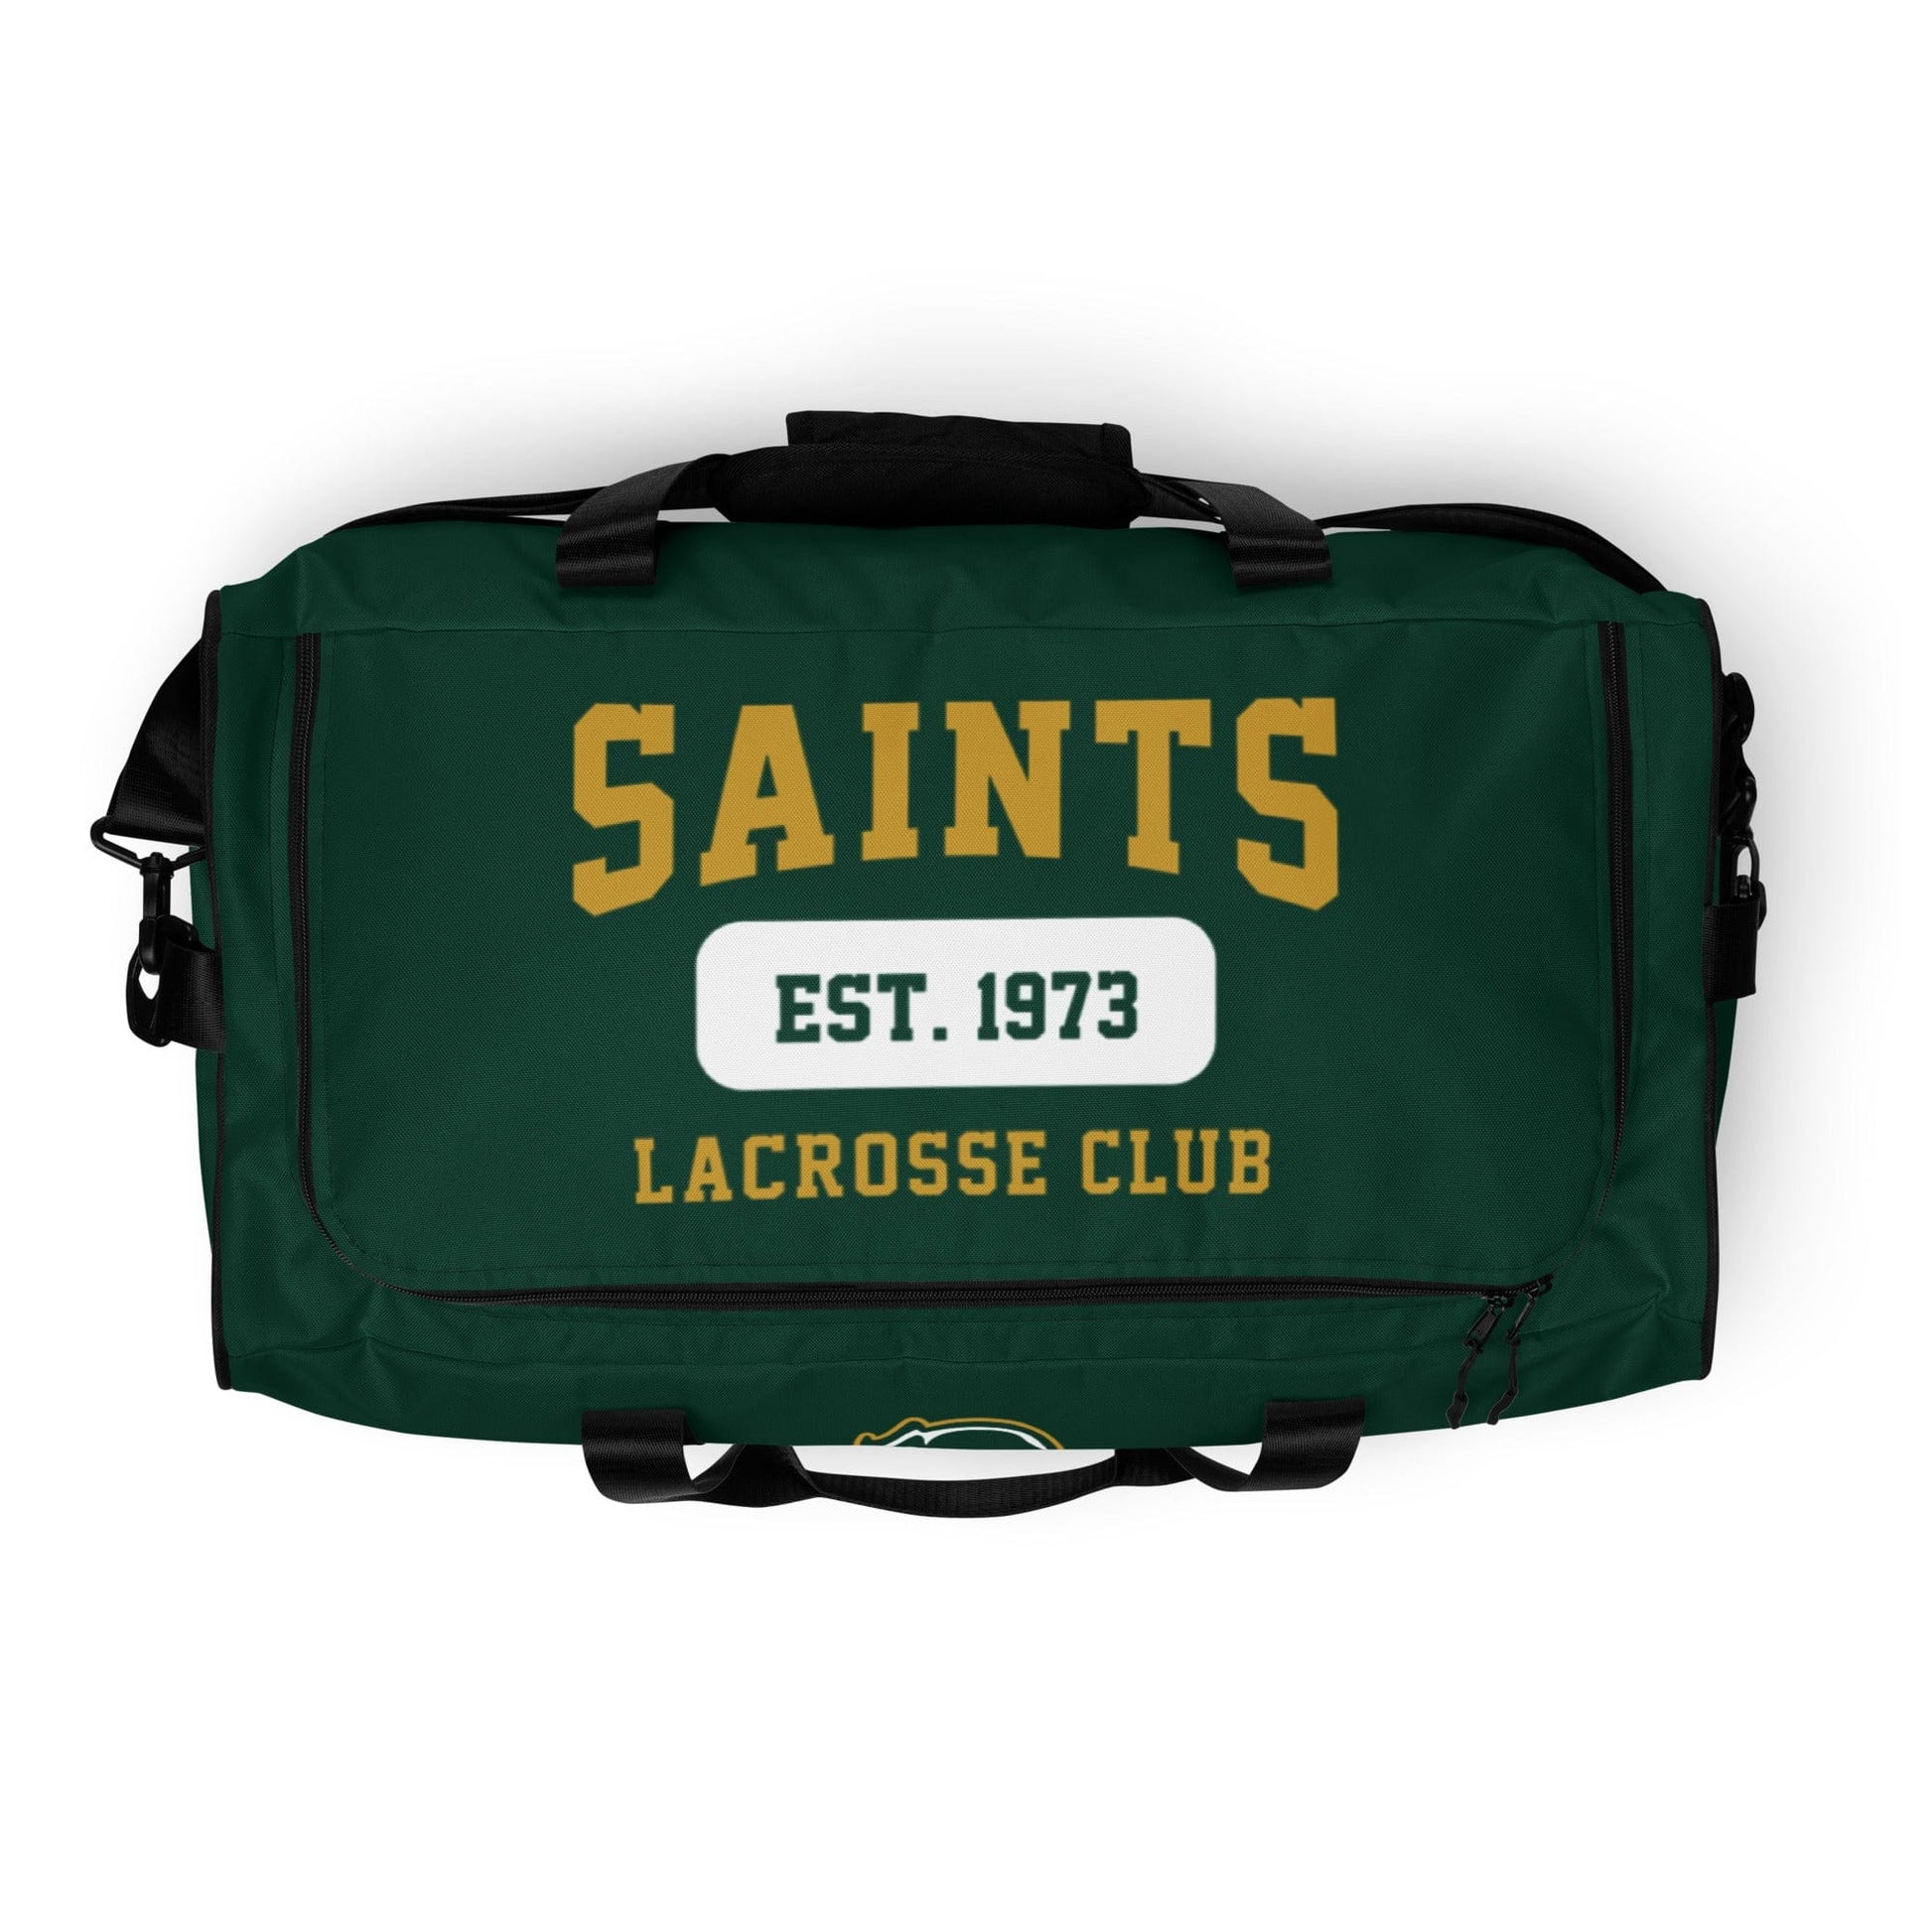 Briarcrest Lacrosse Sideline Bag Signature Lacrosse